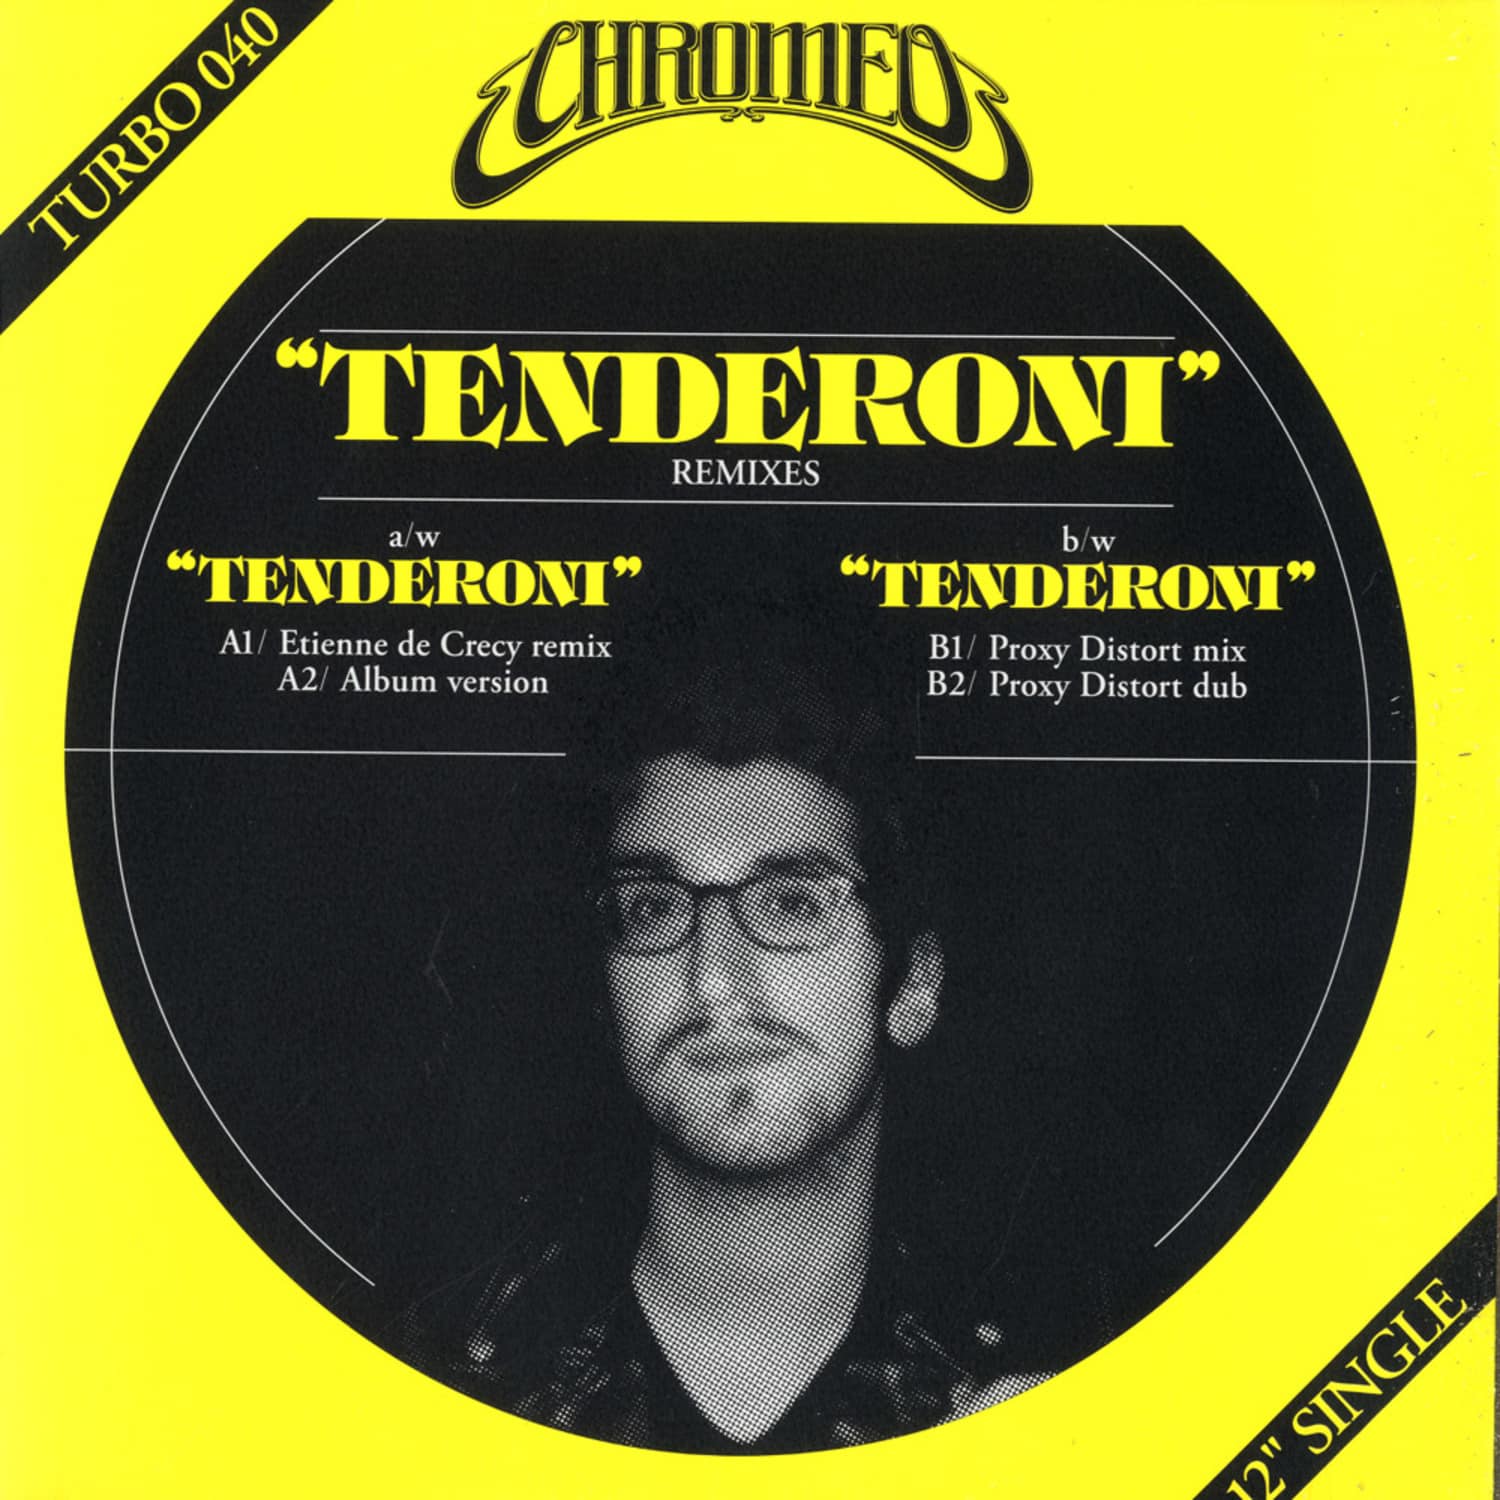 Chromeo - TENDERONI REMIXES